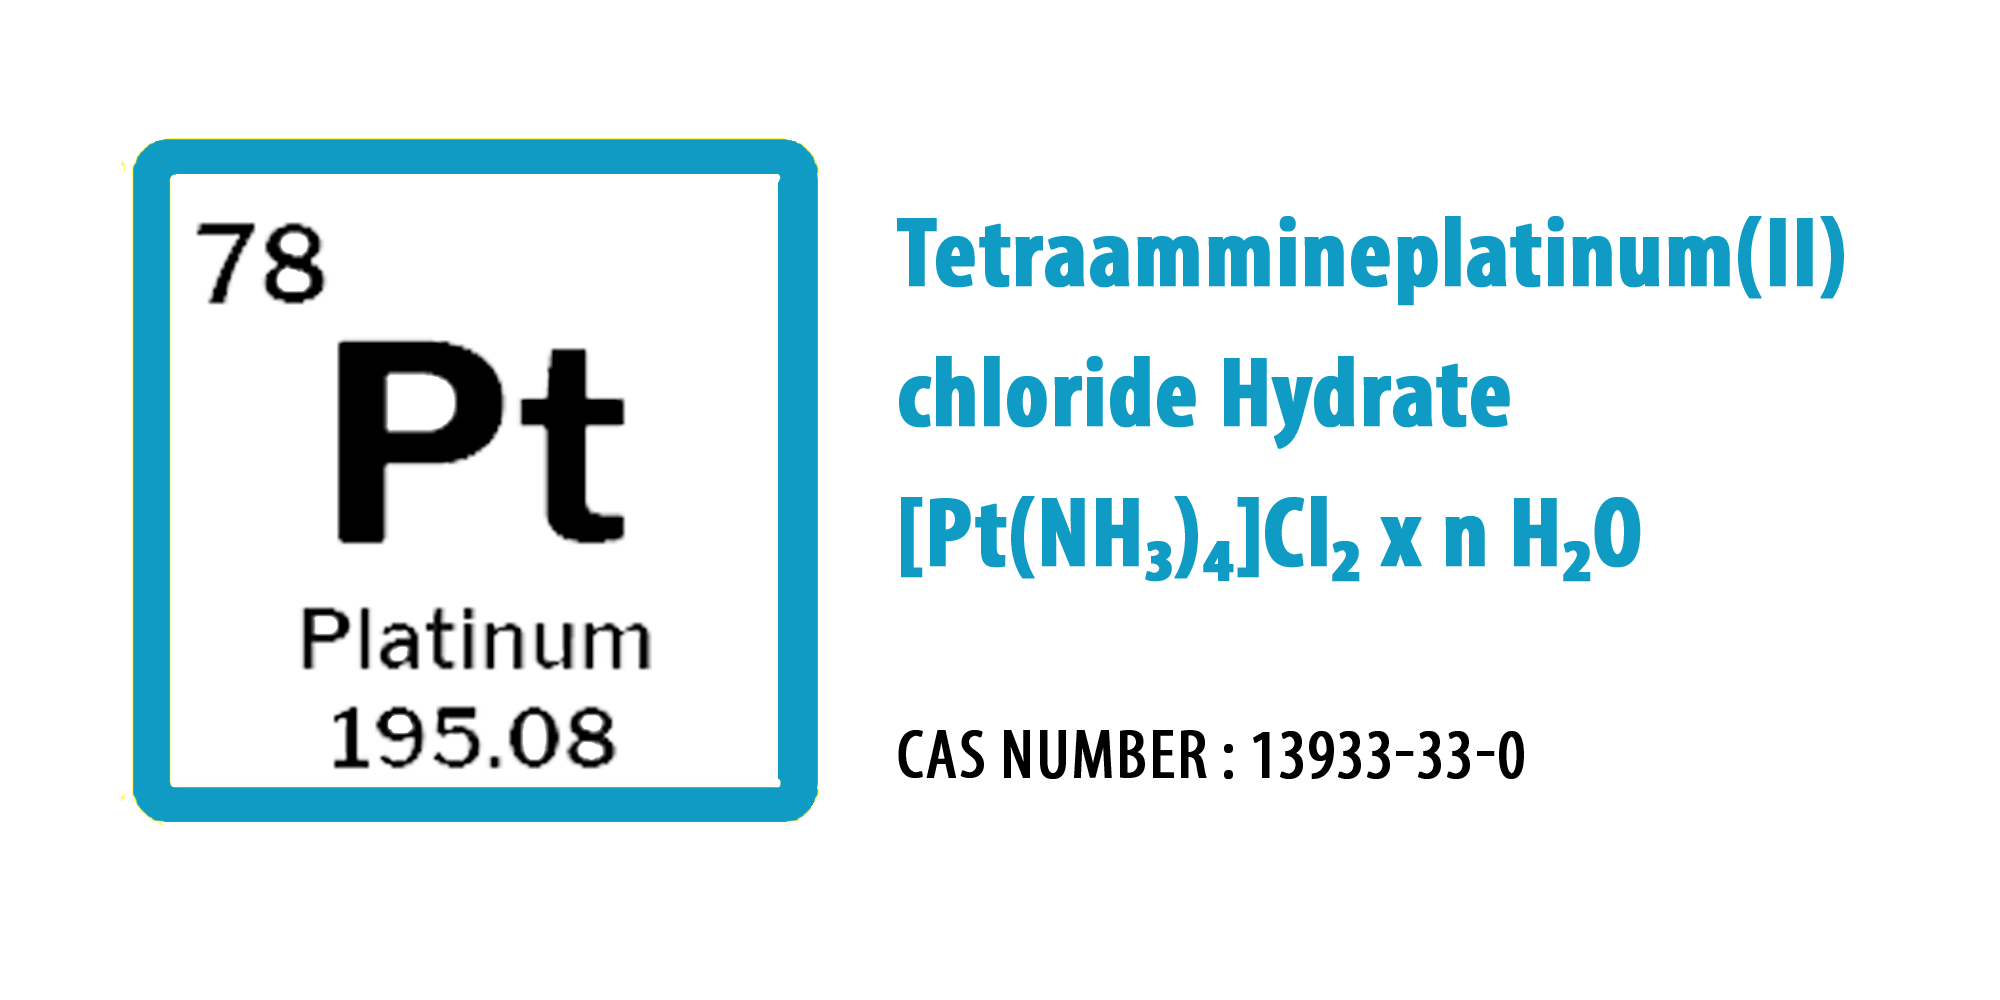 Tetraammineplatinum(